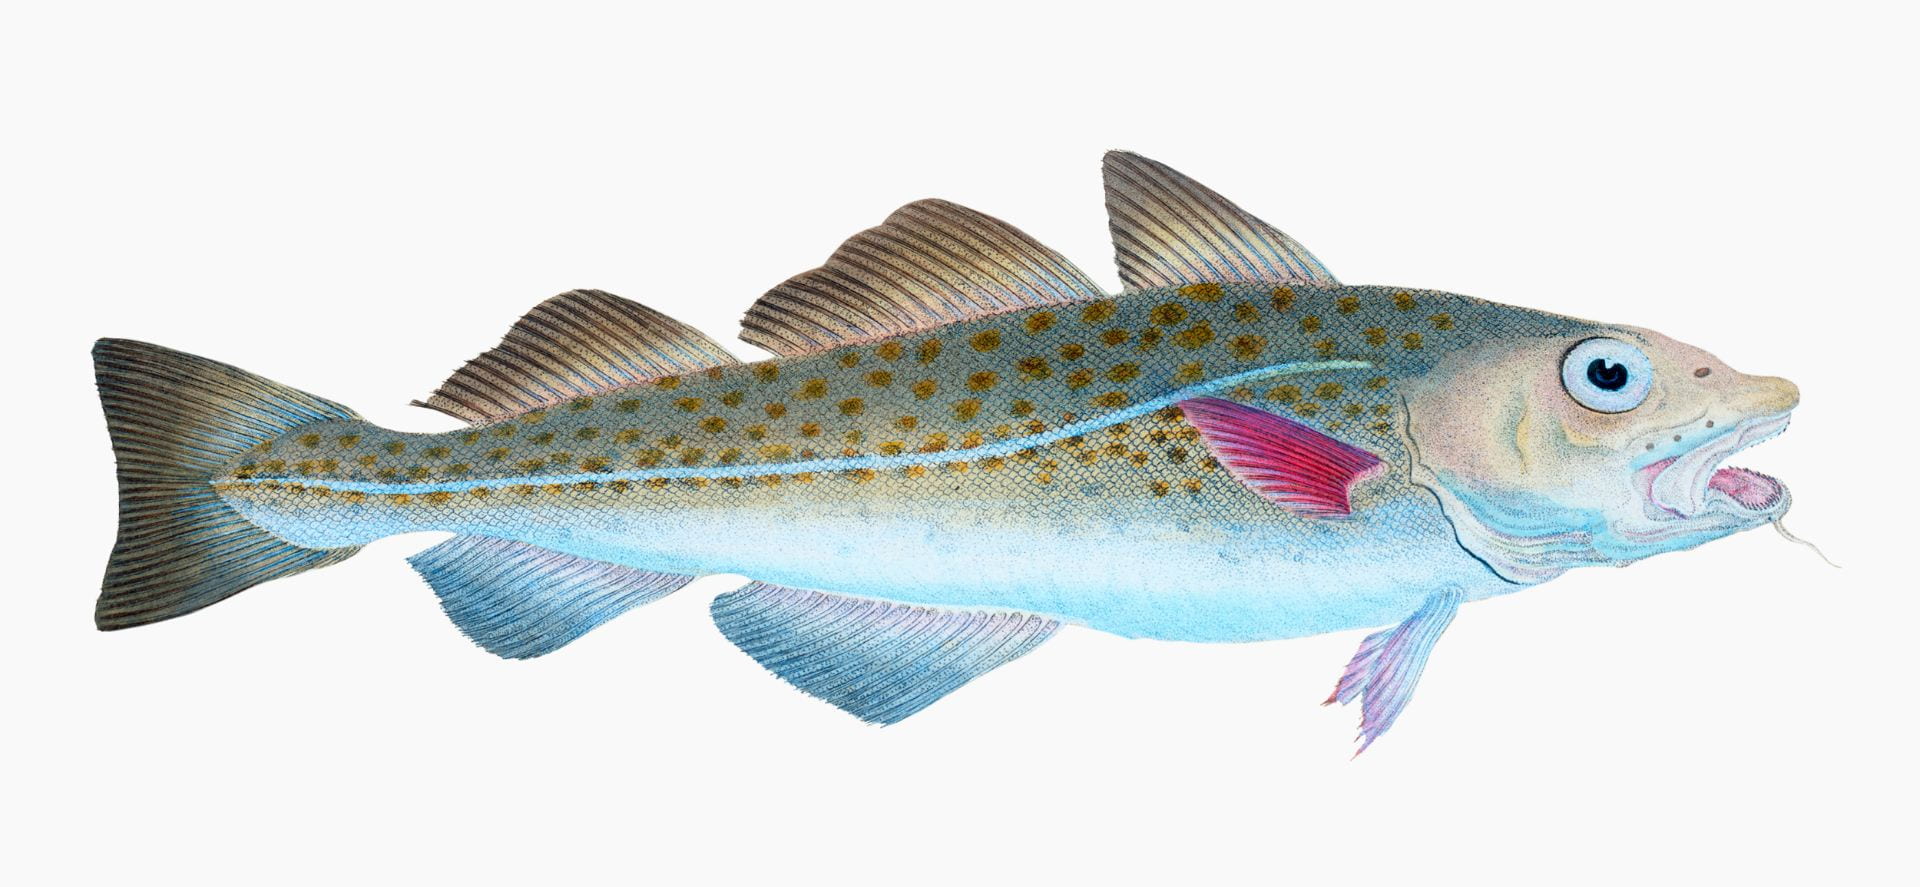 A vintage illustration of an Atlantic cod